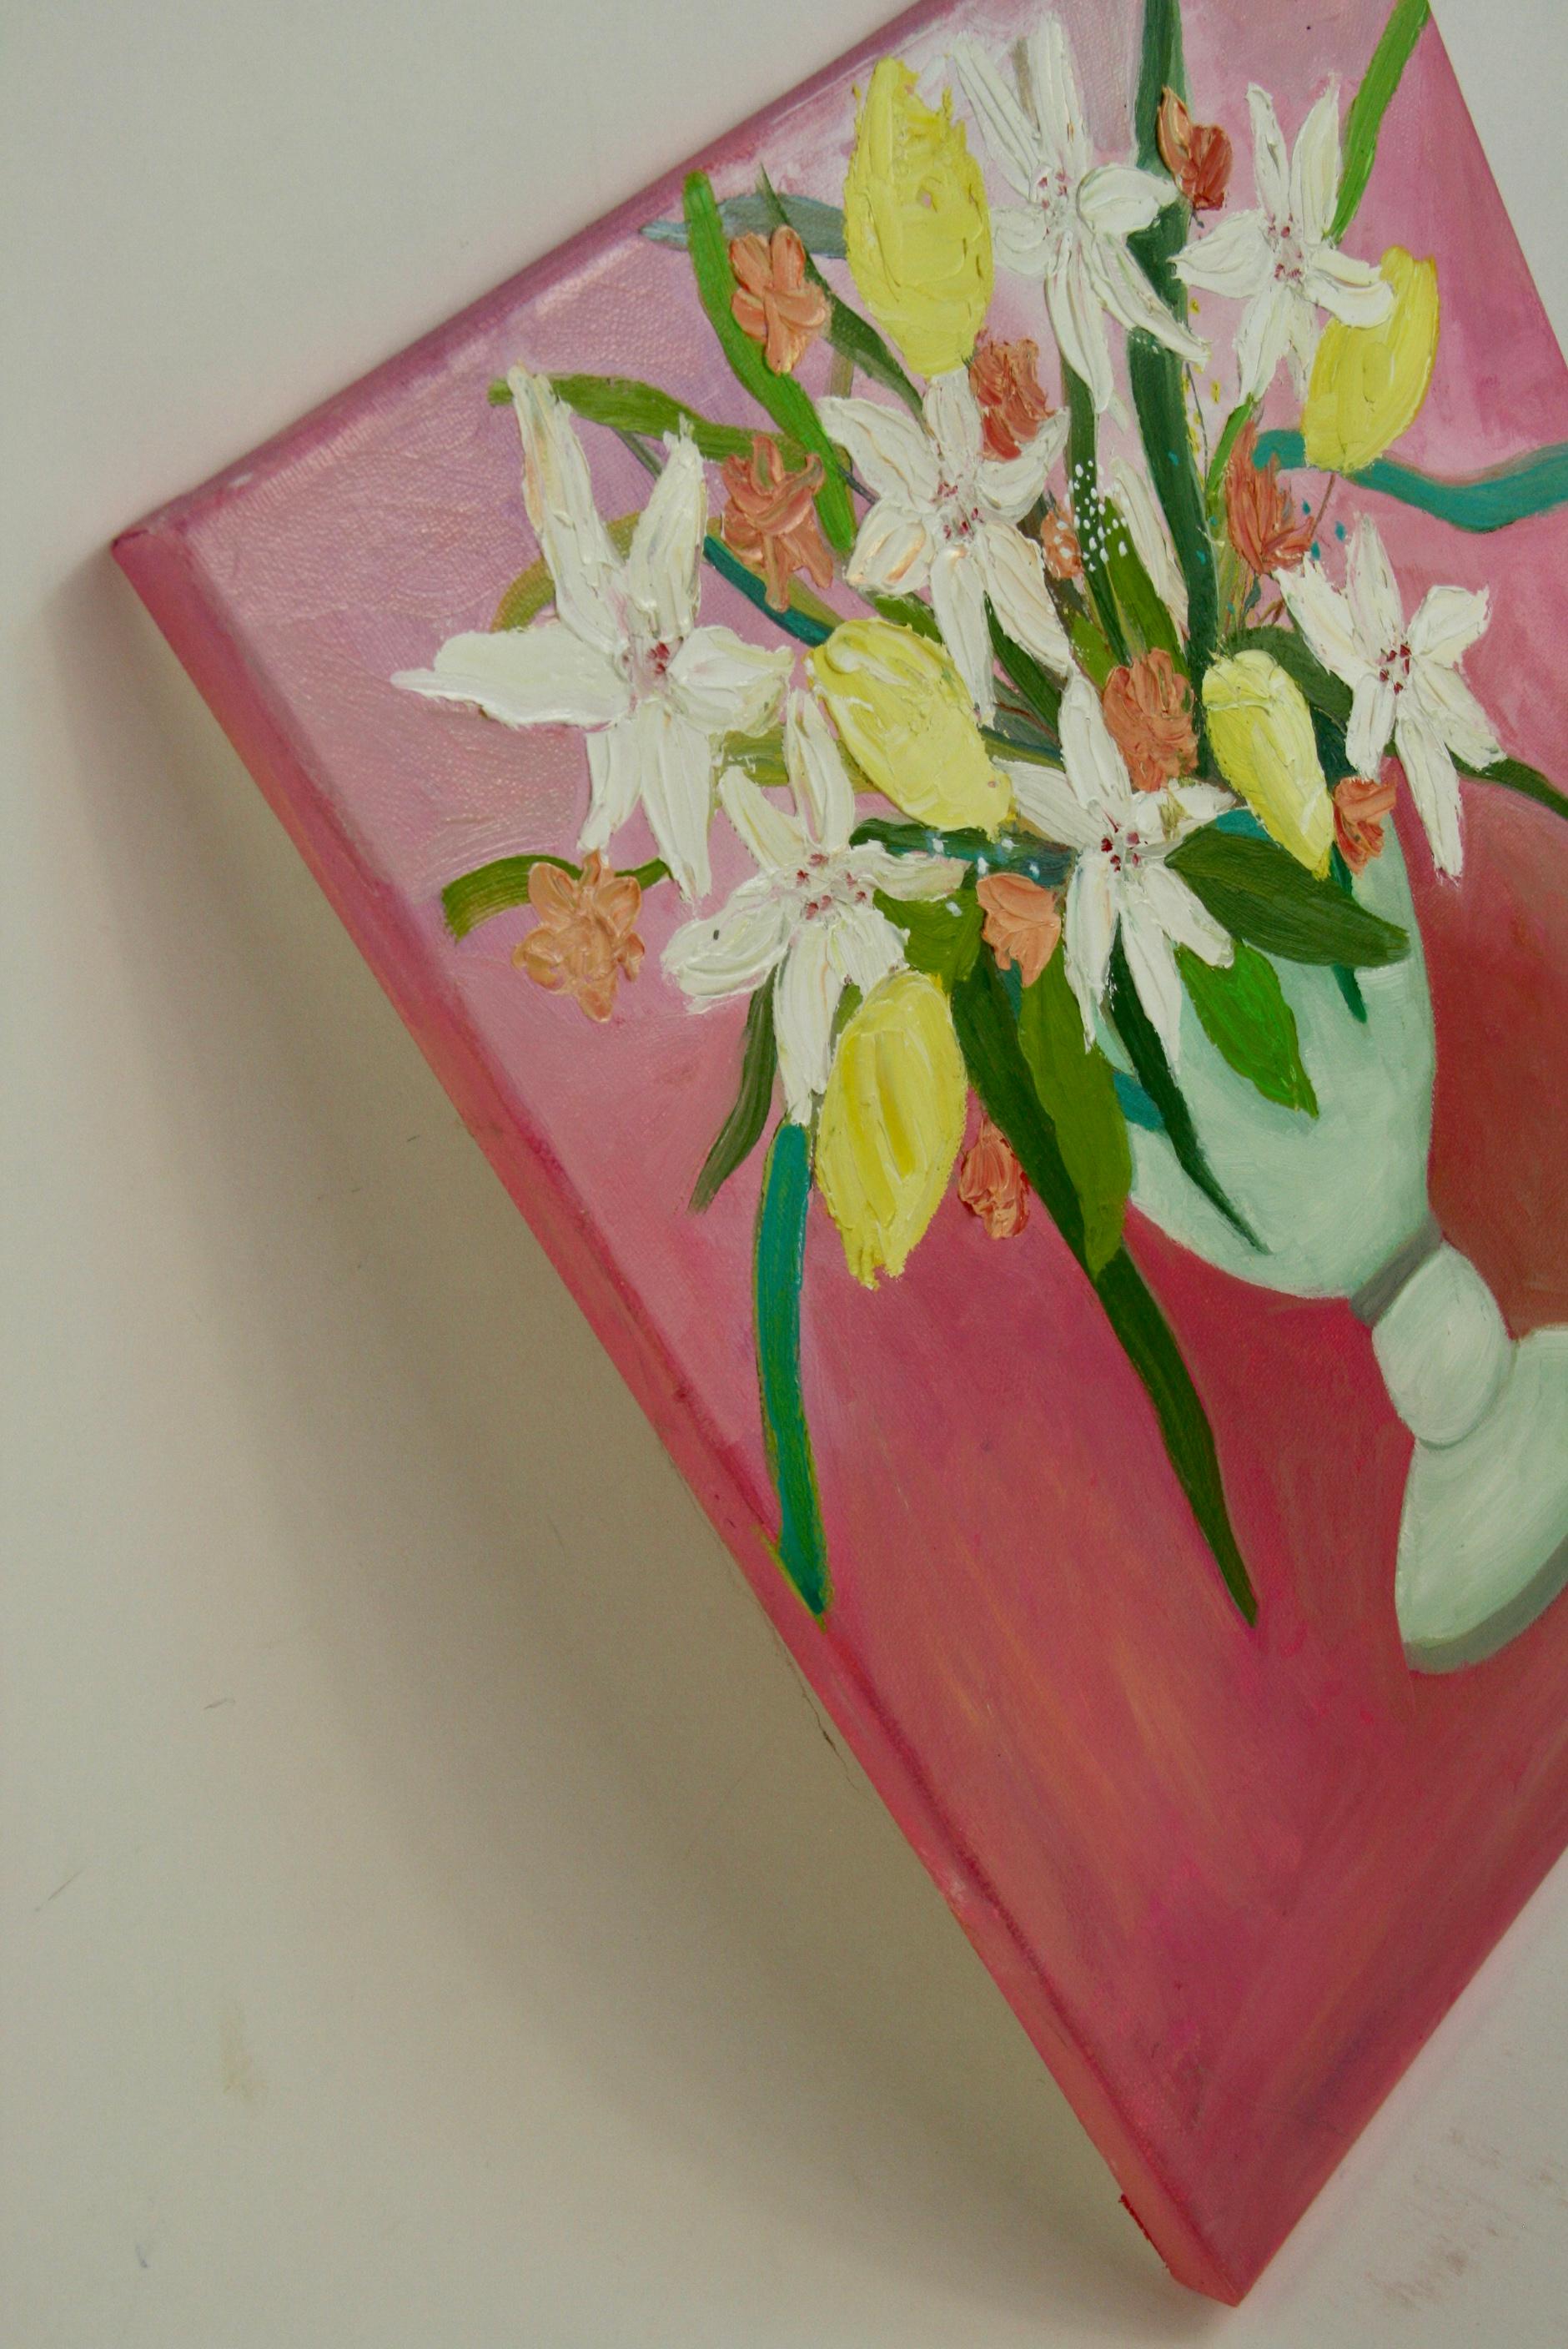 Oil on canvas of flowers in vase on pink backround 
Unframed